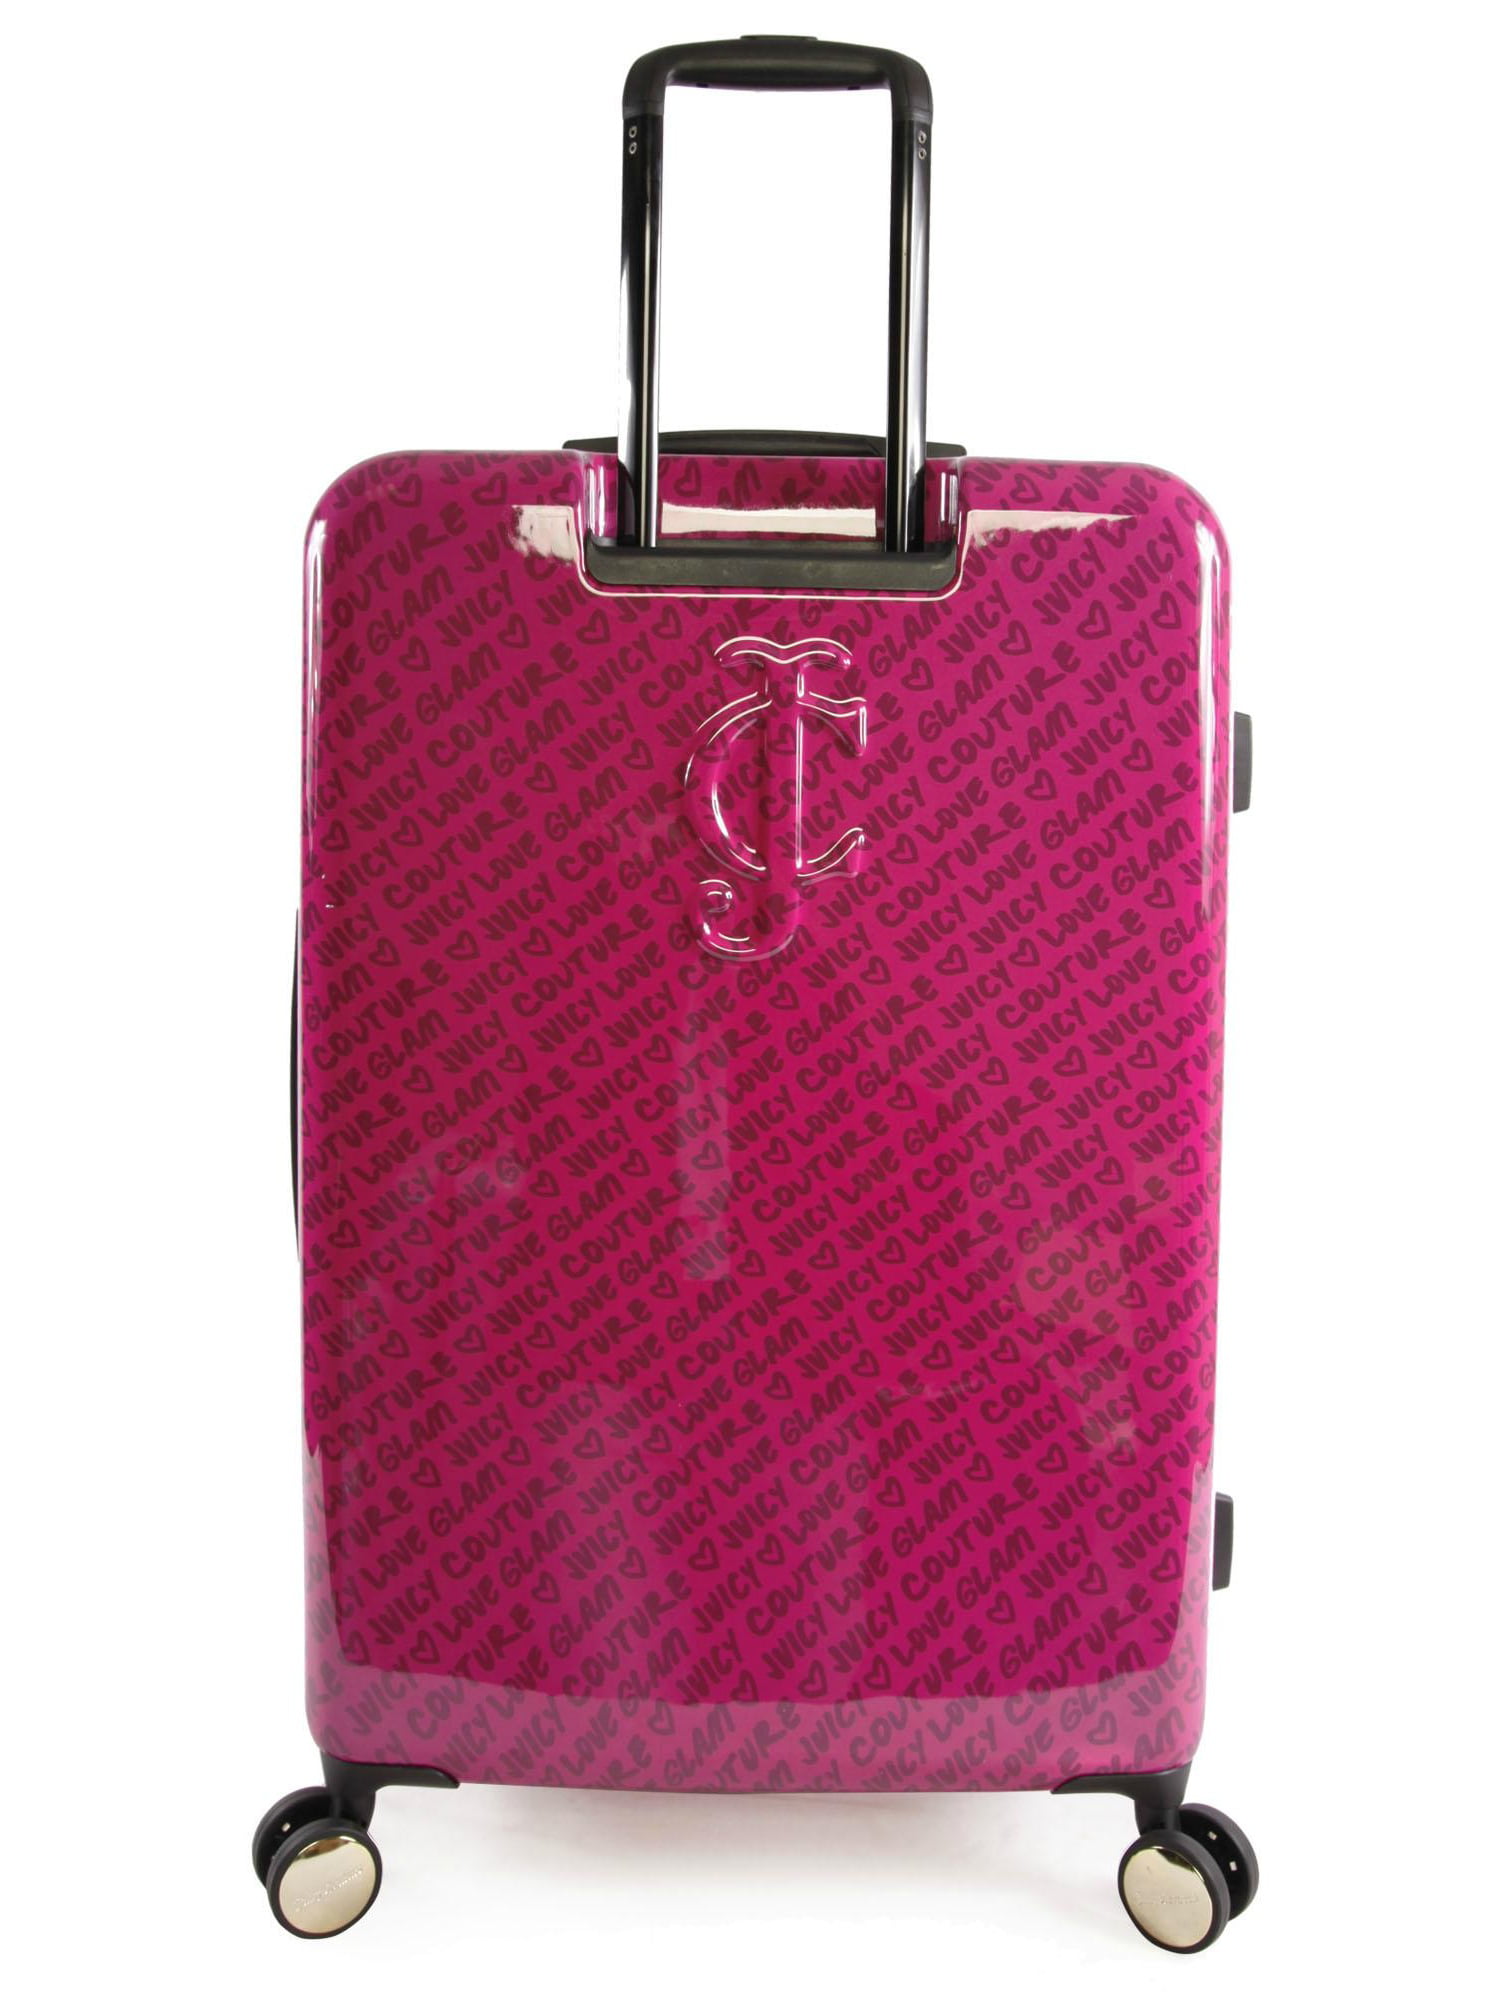 Juicy Cassandra Hardside Luggage in Fuchsia - Walmart.com